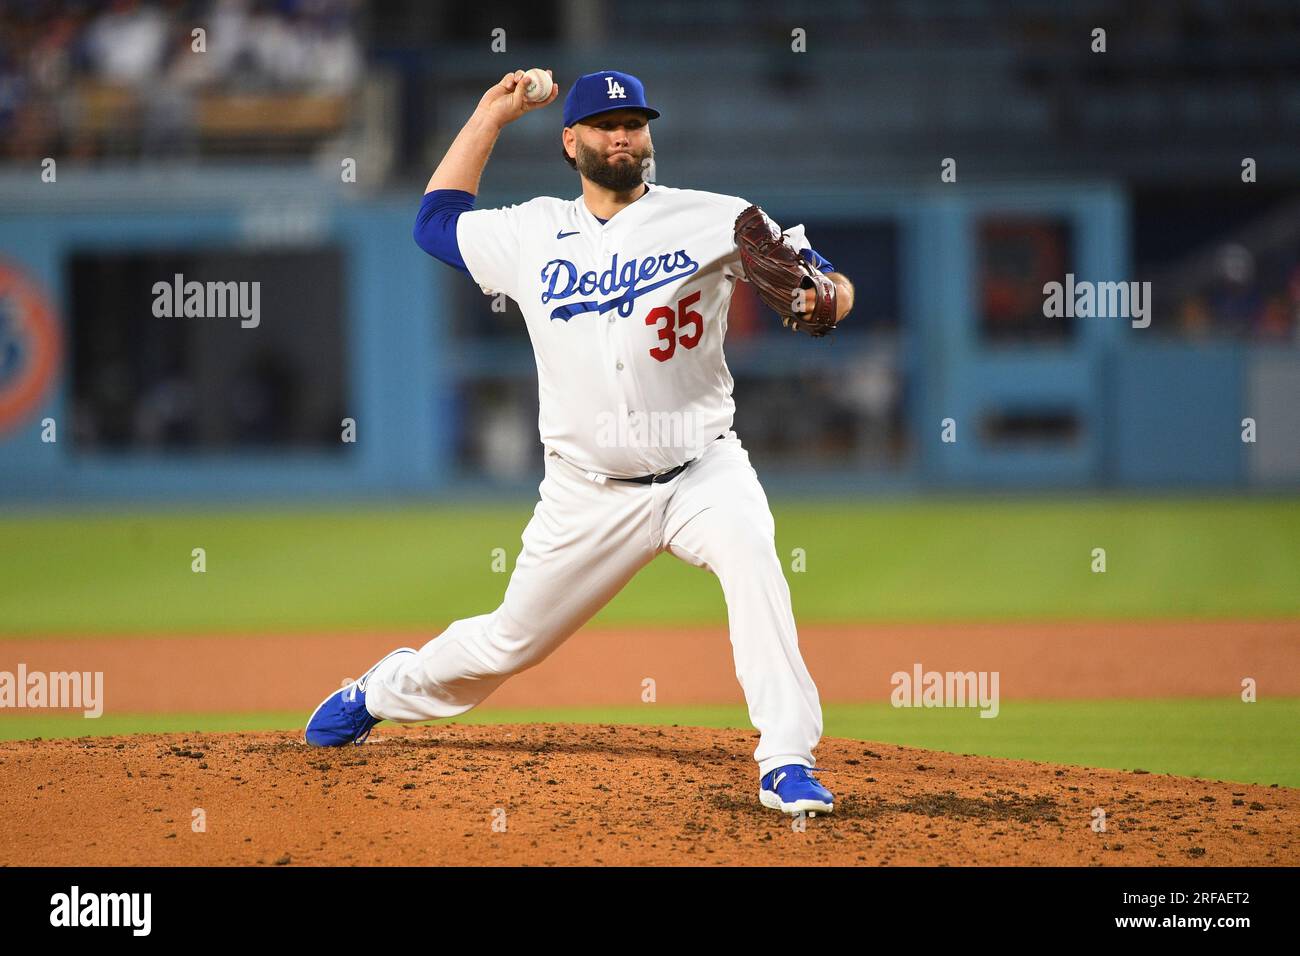 LOS ANGELES, CA - AUGUST 01: Los Angeles Dodgers pitcher Lance